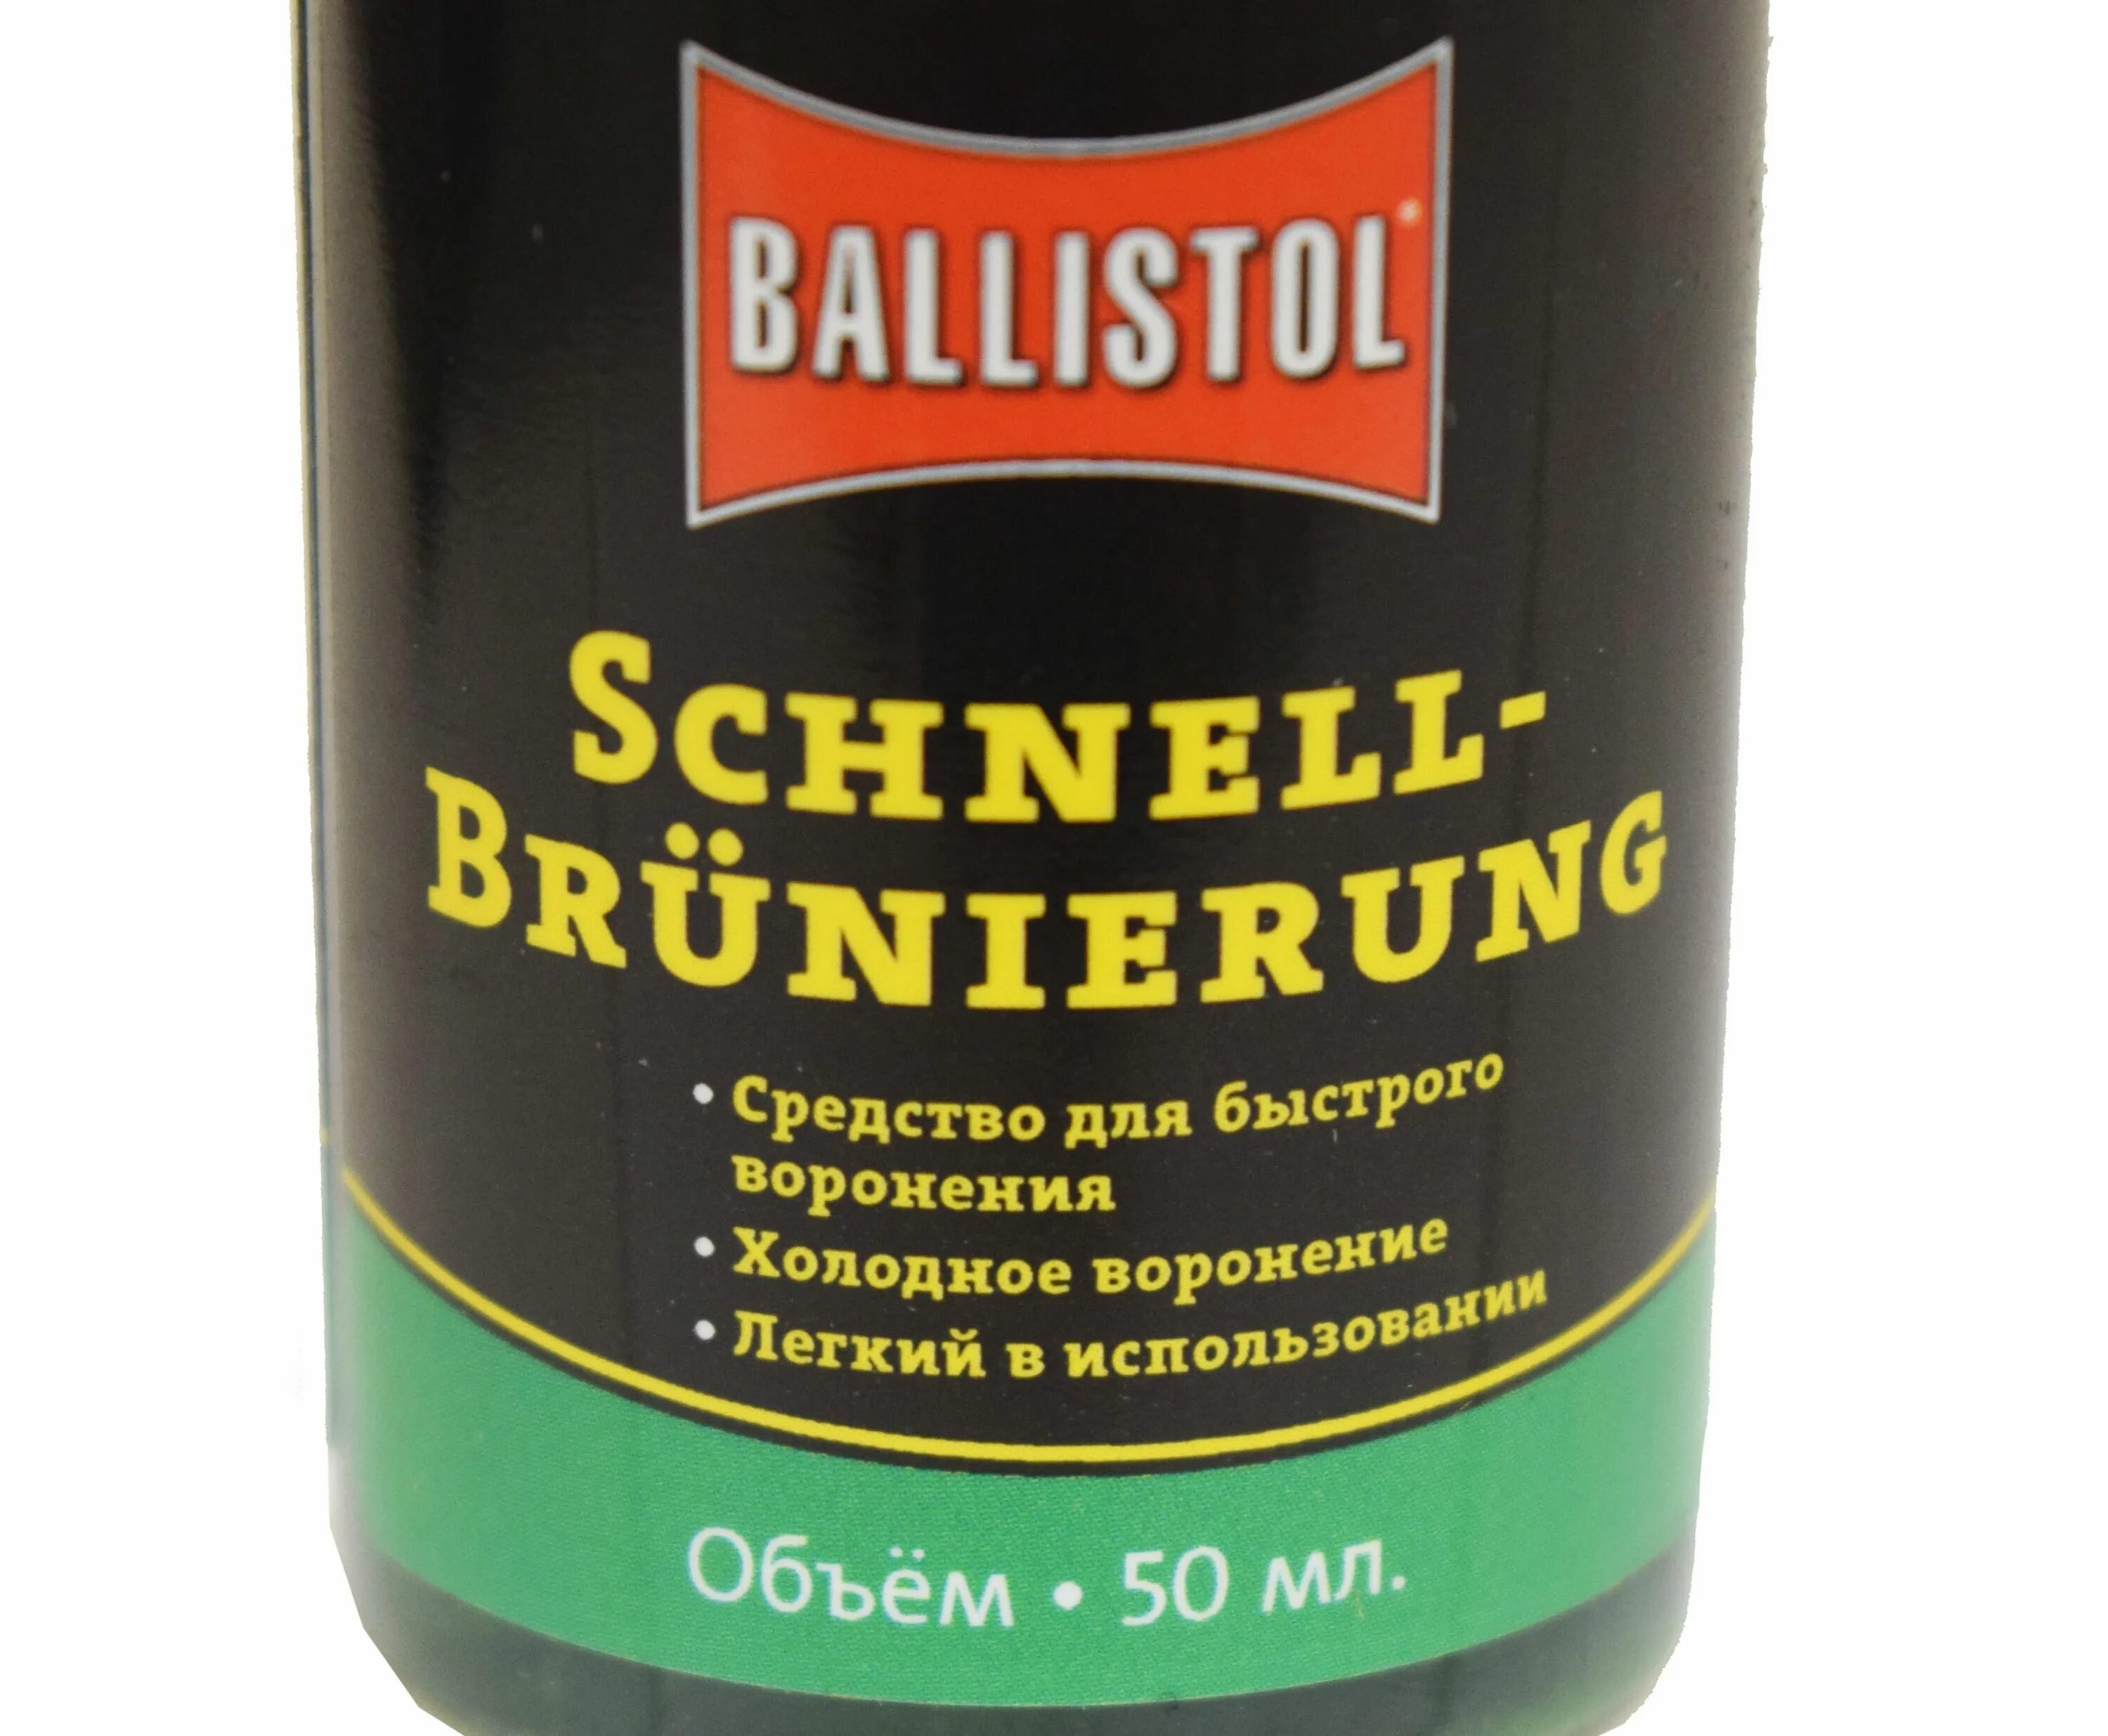 Ballistol Schnellbrunierung средство для воронения 50мл. Клевер баллистол воронение. Средство для воронения Ballistol 50 мл. Холодное воронение Ballistol. Средство для воронения купить